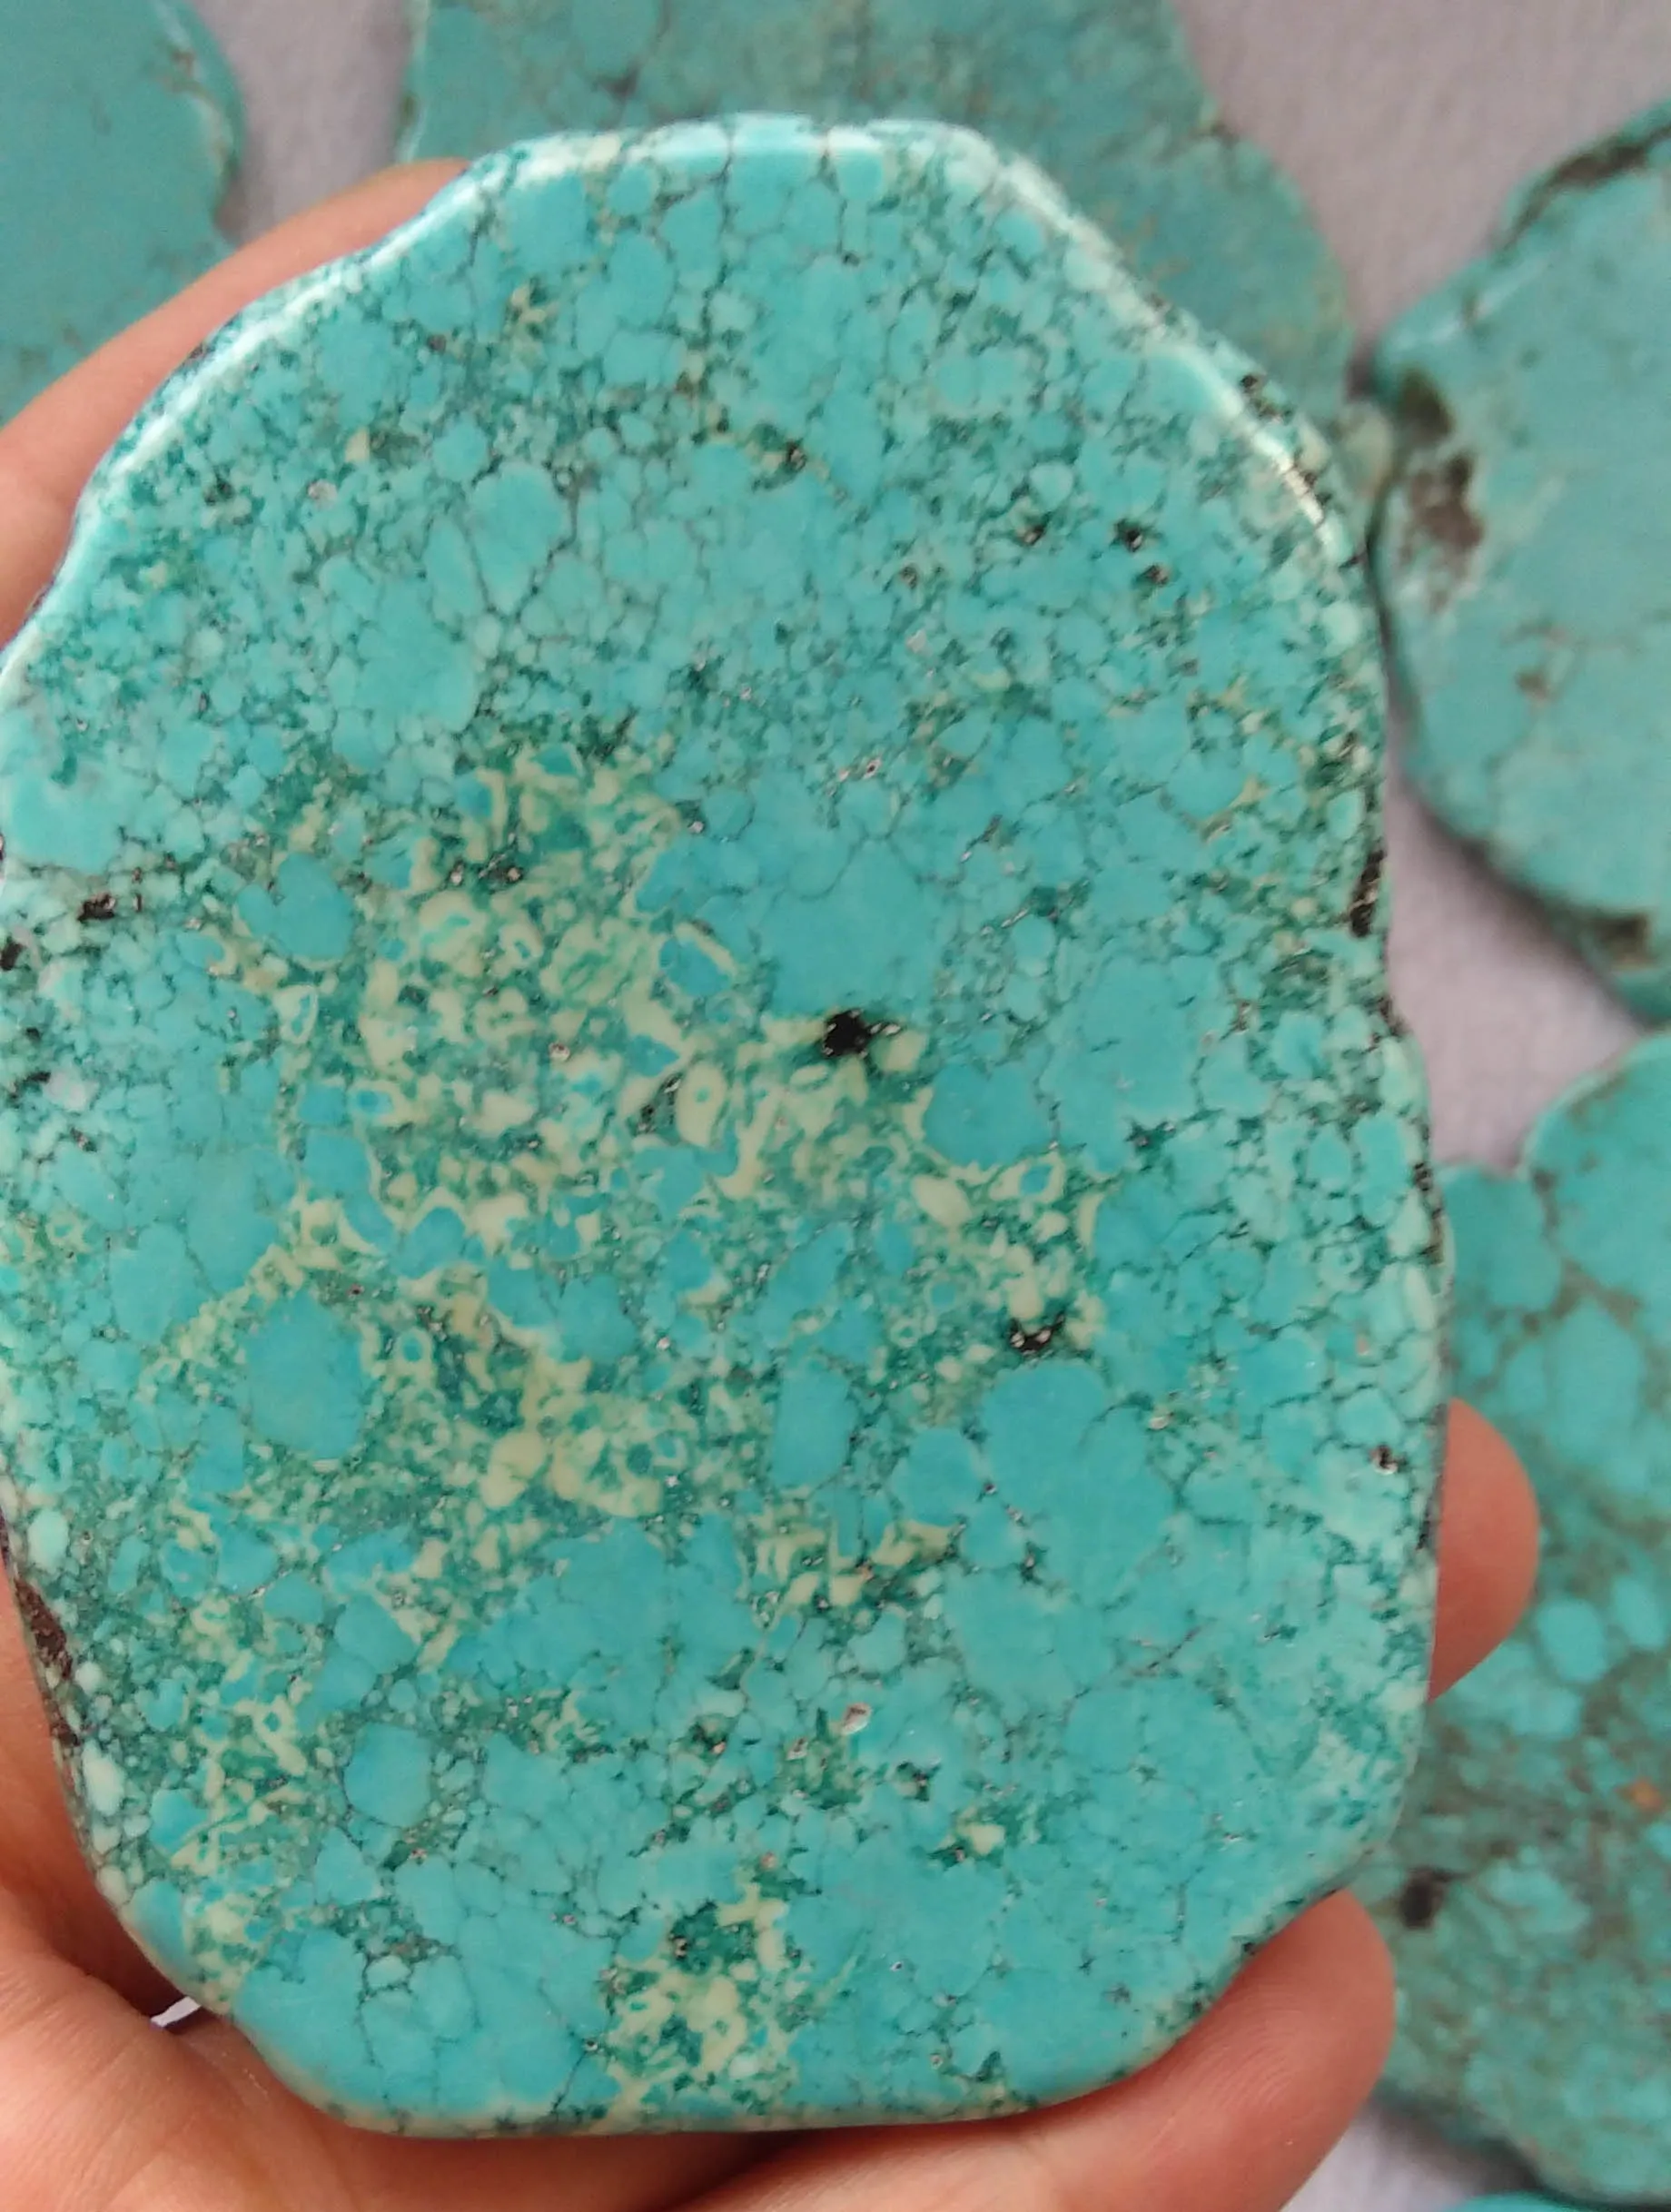 5st Turquoise Slab Turquoise Stone Cabochon Card Slab Form Venes Plat Nuggets Bead Hitta 30-100mm4 High Quality2256